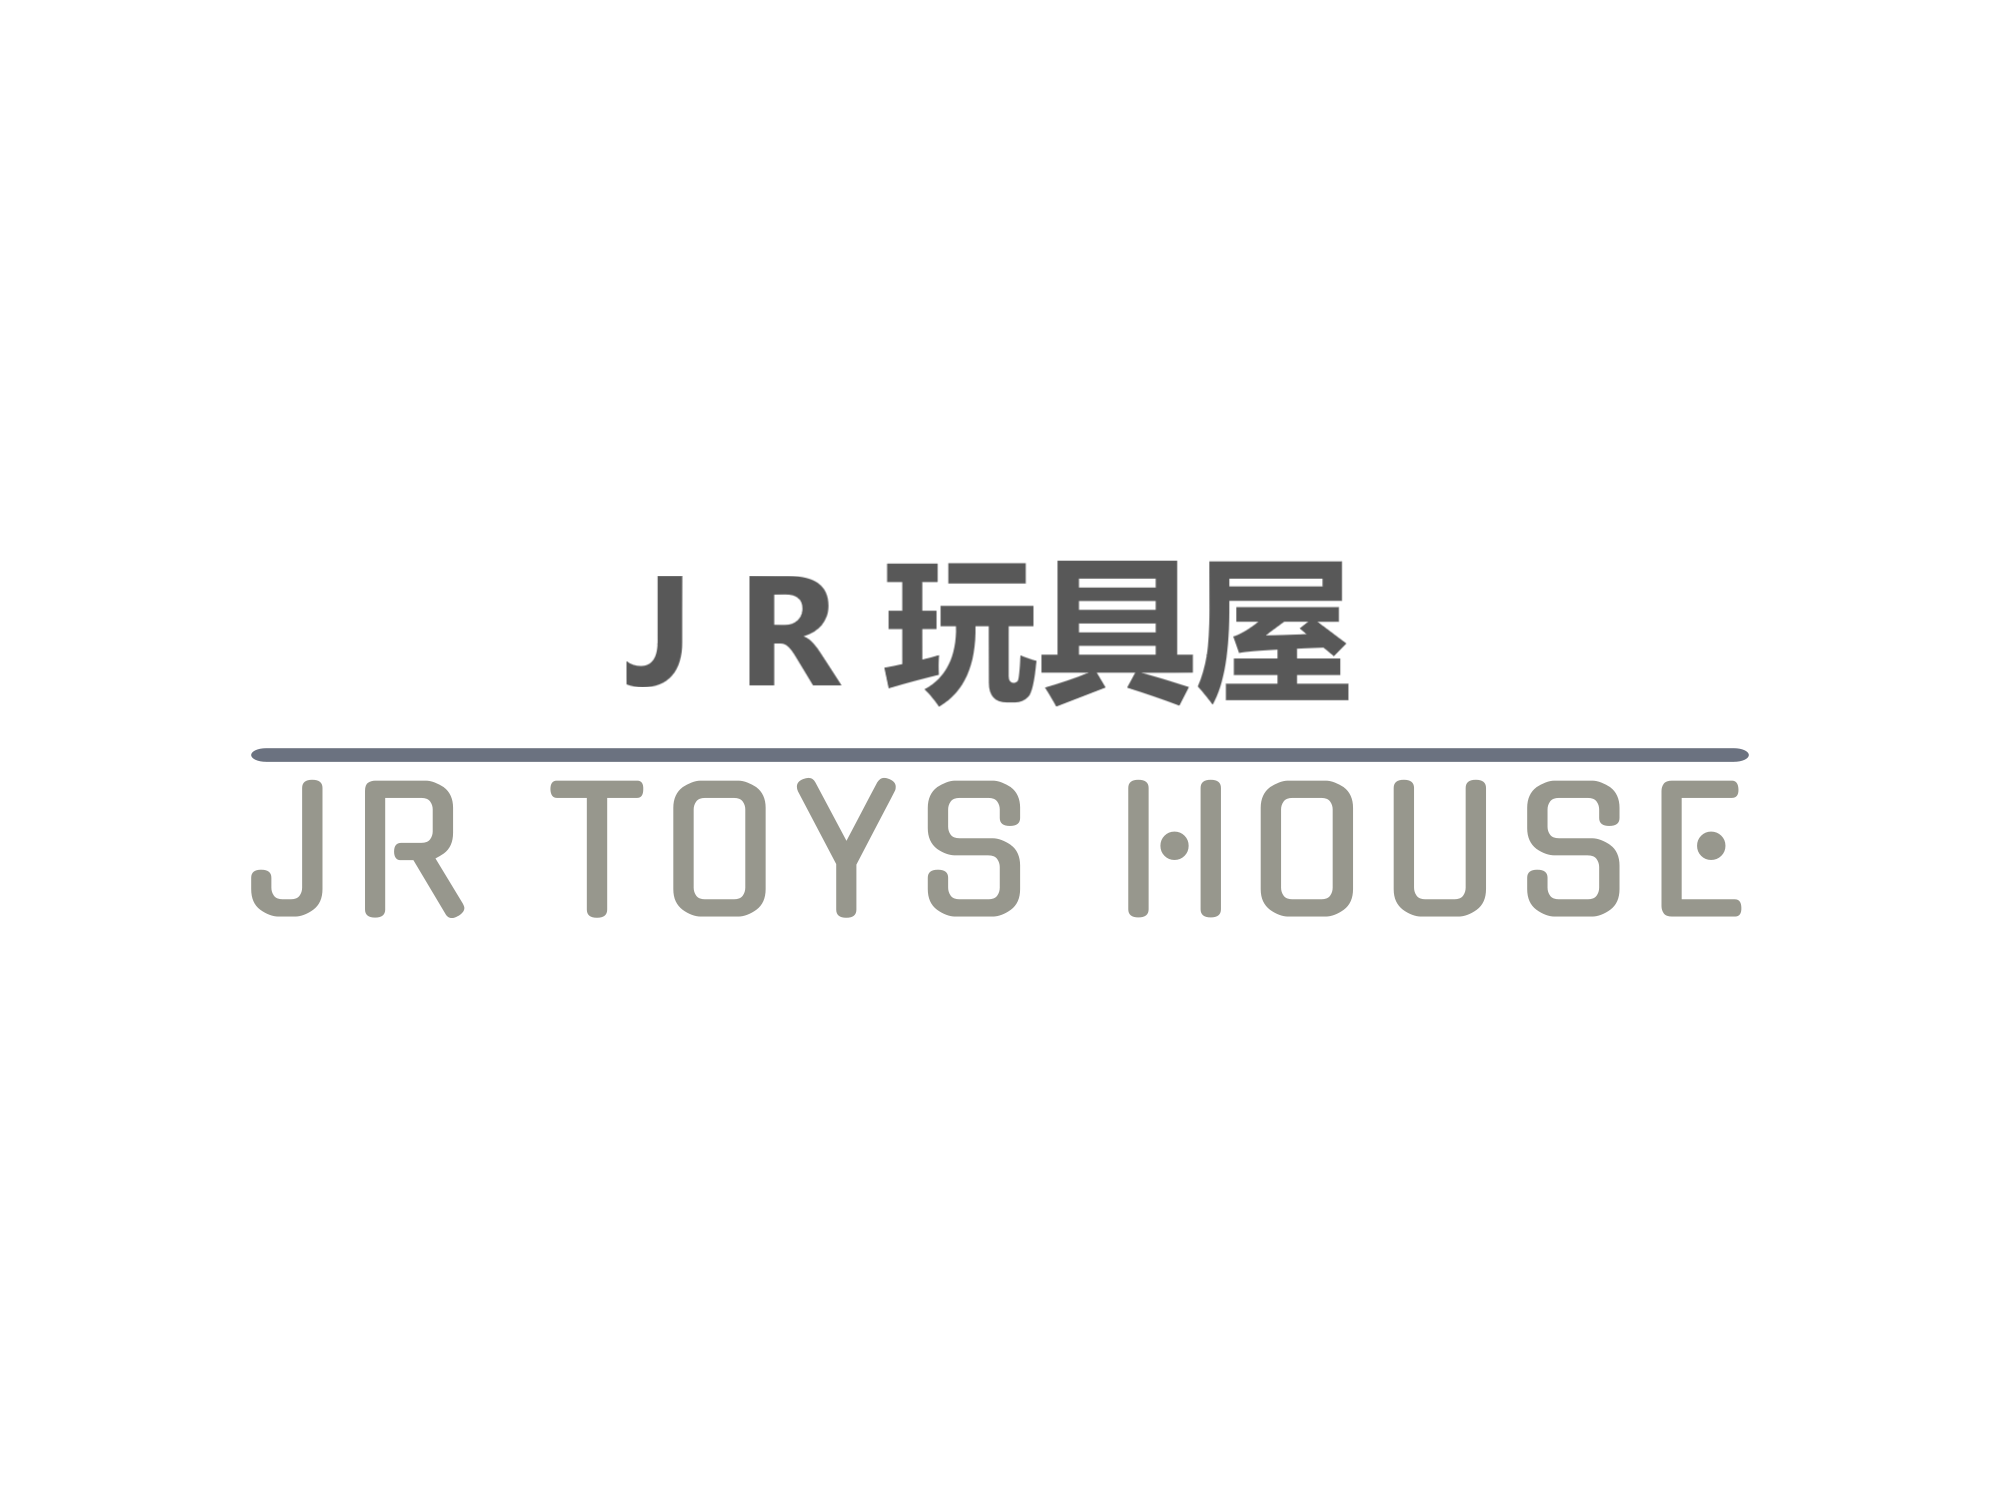 JR TOYS HOUSE